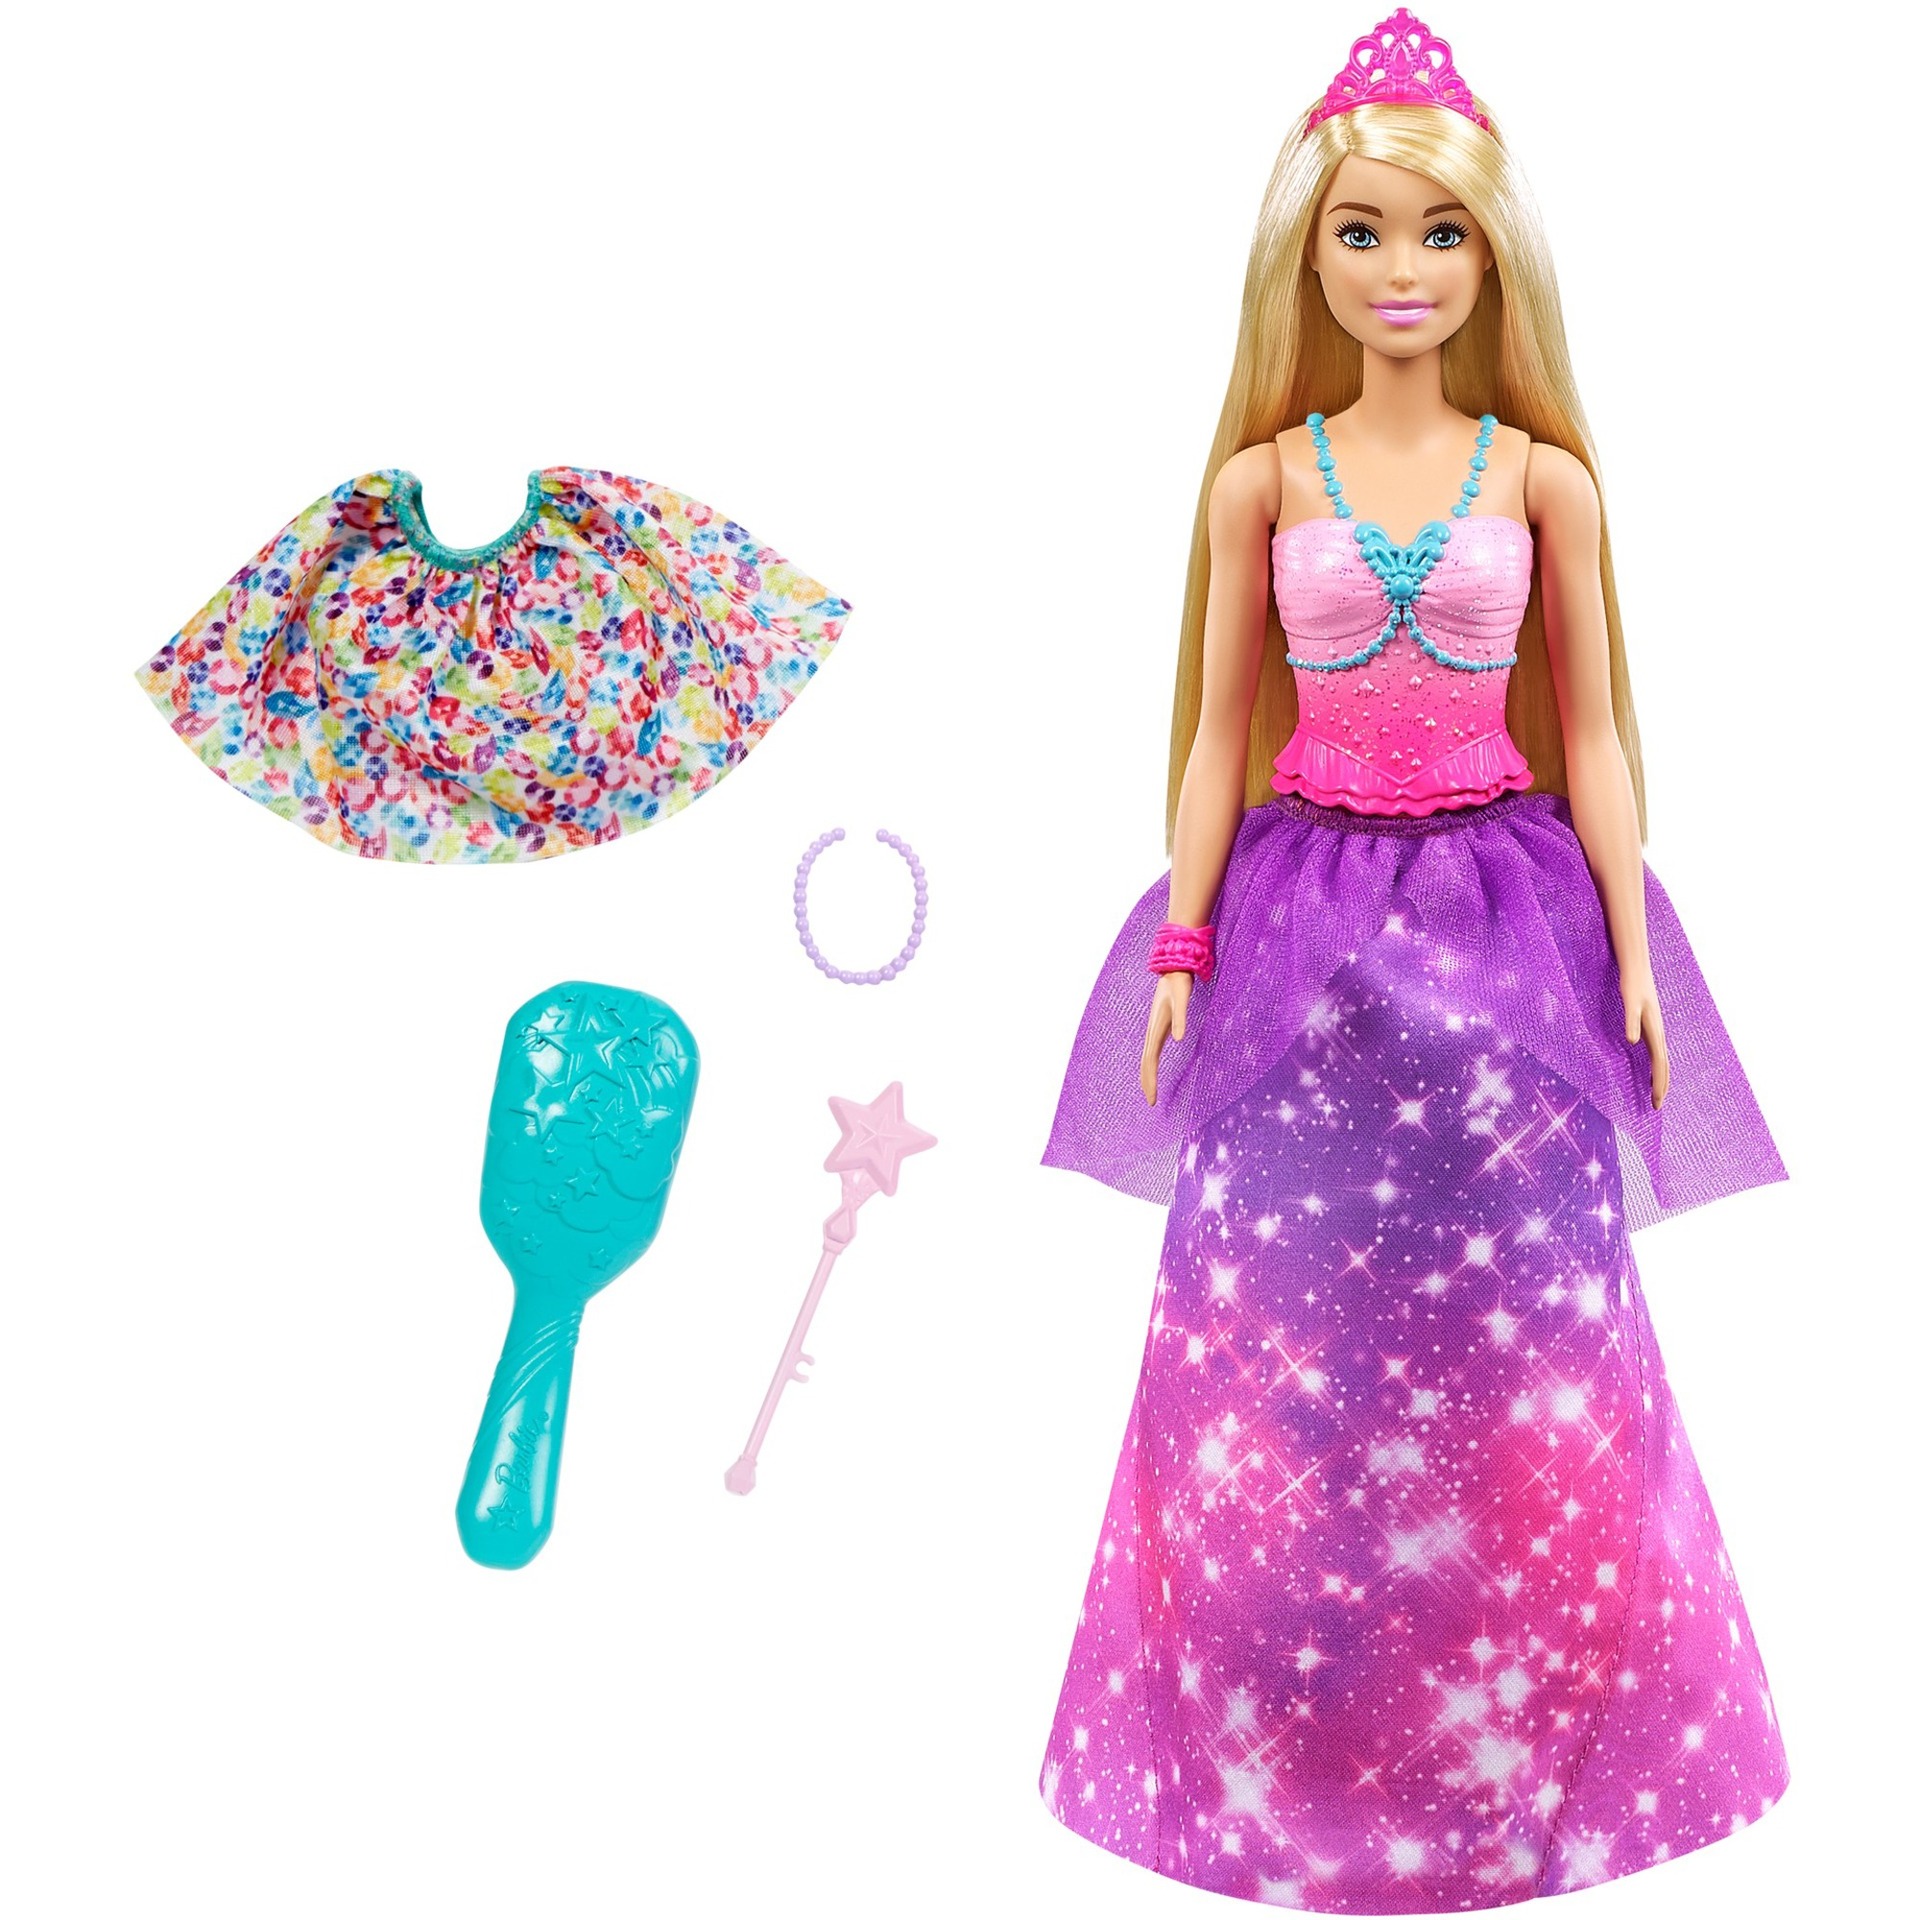 Image of Alternate - Barbie Dreamtopia 2-in-1 Prinzessin & Meerjungfrau Puppe online einkaufen bei Alternate